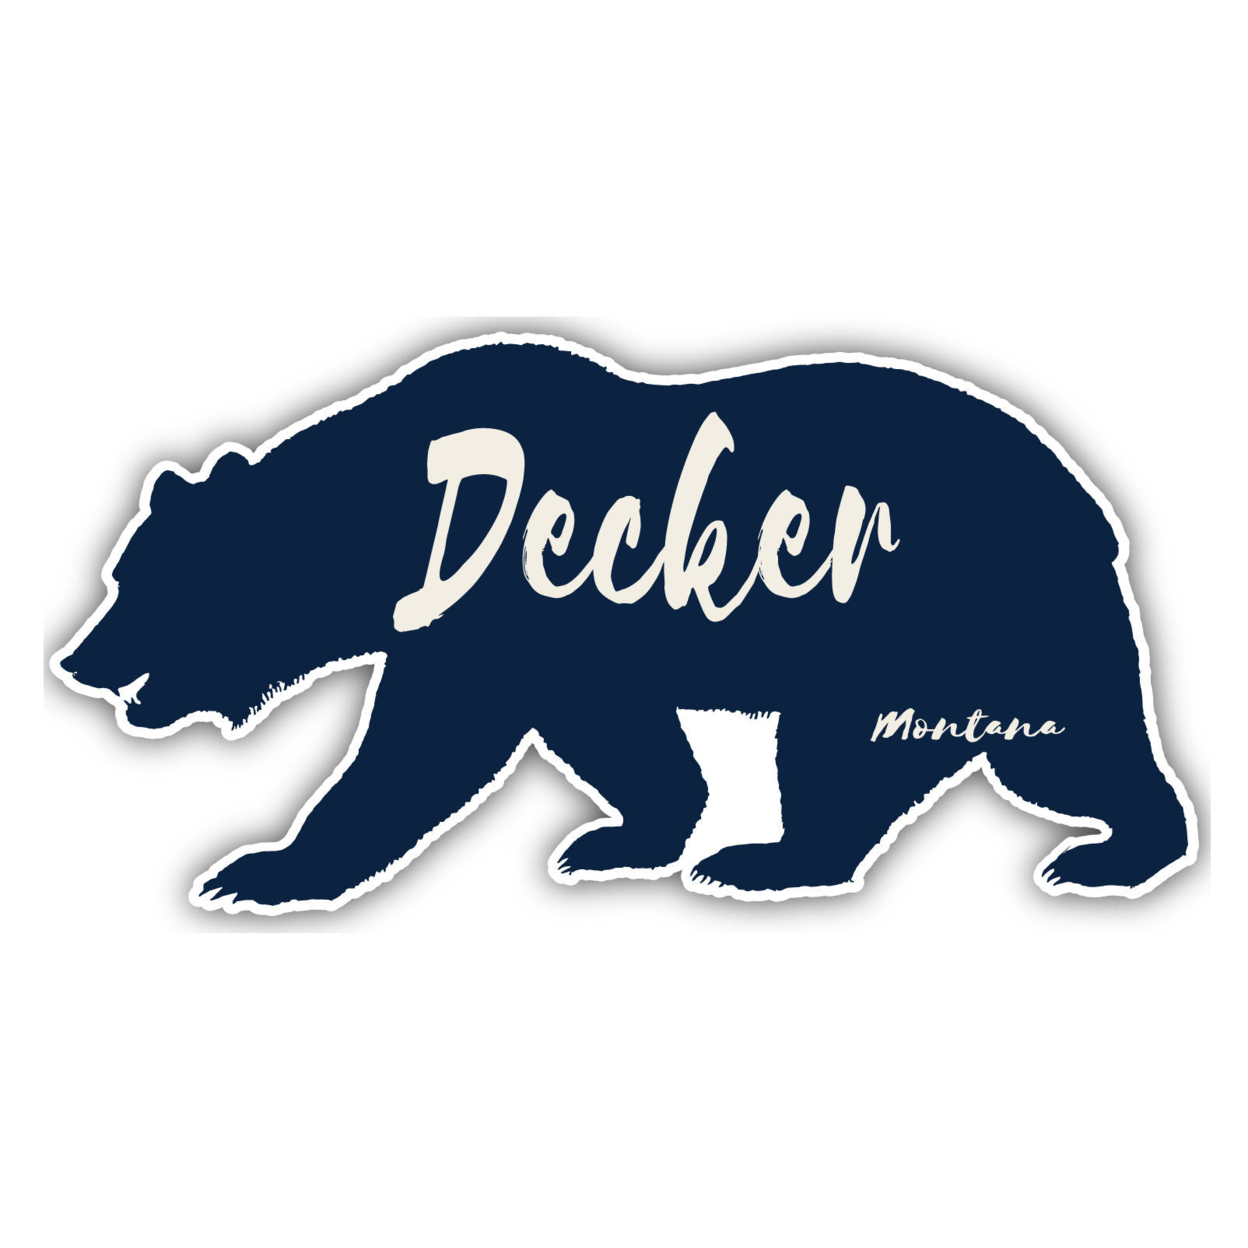 Decker Montana Souvenir Decorative Stickers (Choose Theme And Size) - 4-Pack, 8-Inch, Bear